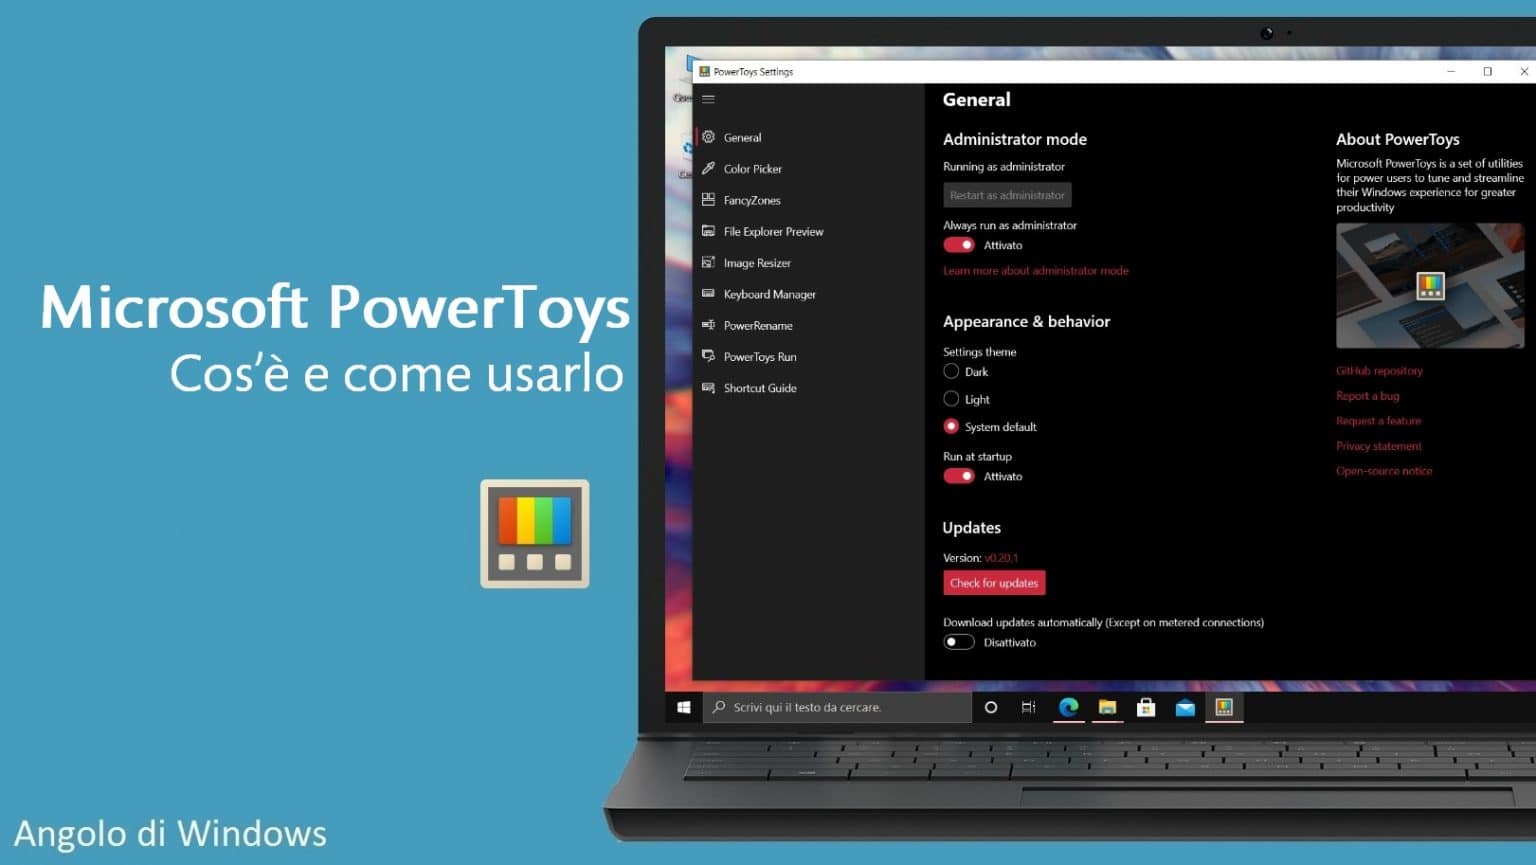 Microsoft PowerToys 0.74.0 download the new version